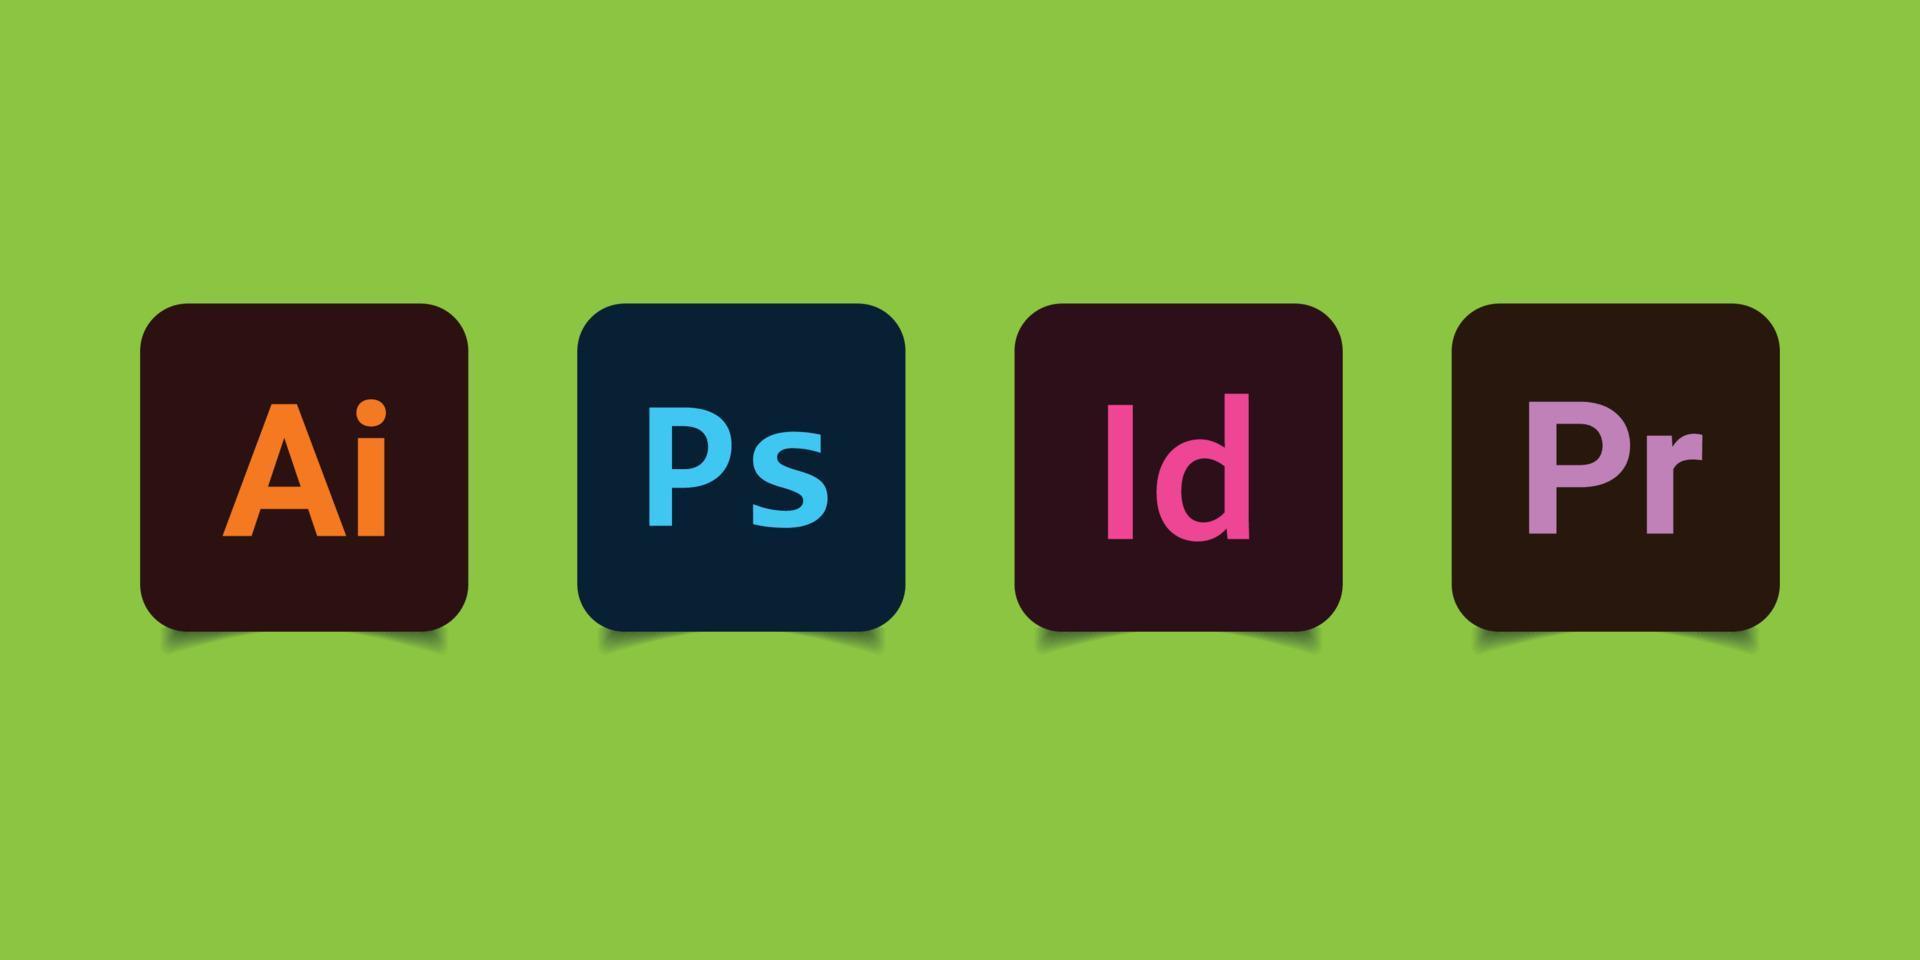 Adobe Icons Vector Art